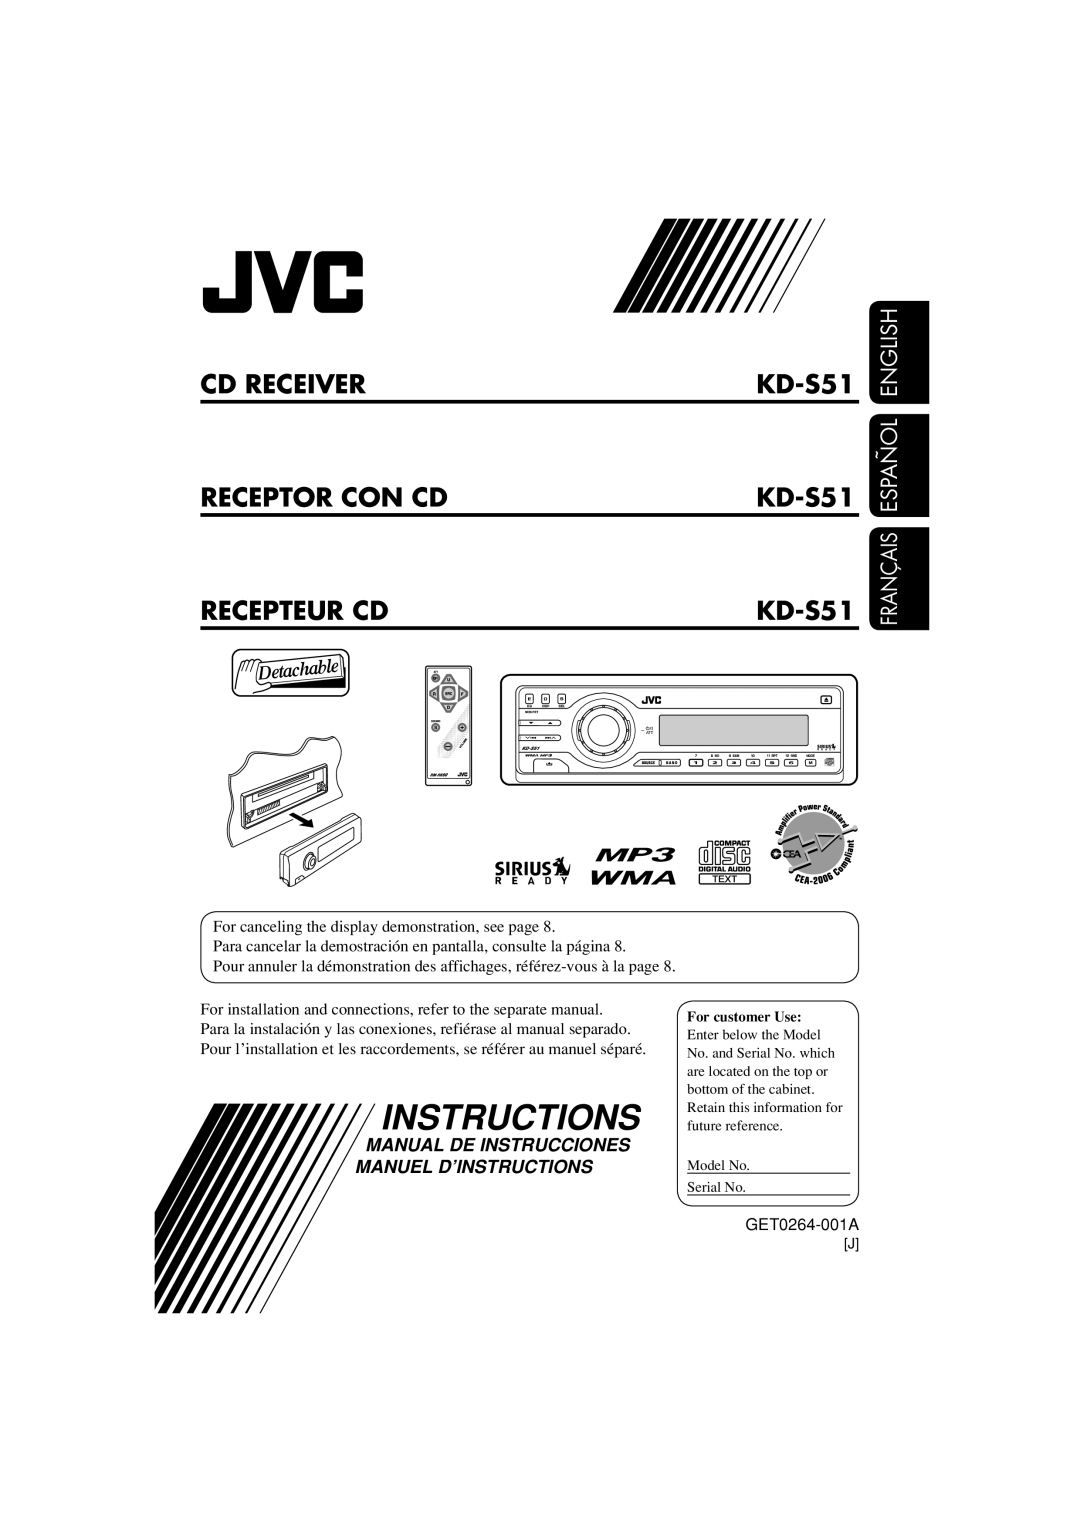 JVC manual Cd Receiver Receptor Con Cd Recepteur Cd, KD-S51 KD-S51 KD-S51, Français Español English, Instructions 